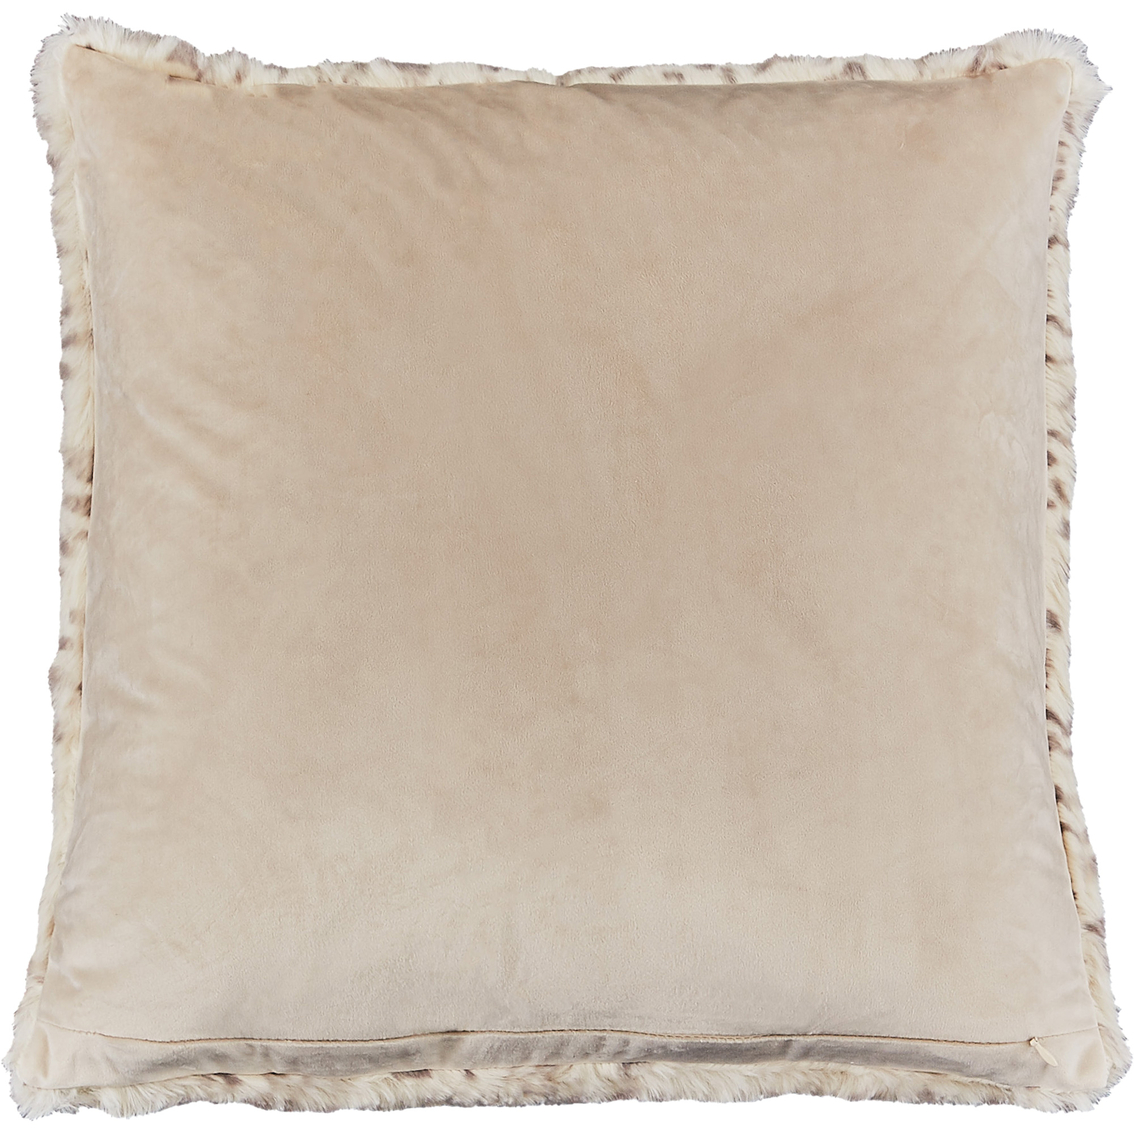 Michael Amini Snow Decorative Pillow - Image 2 of 4